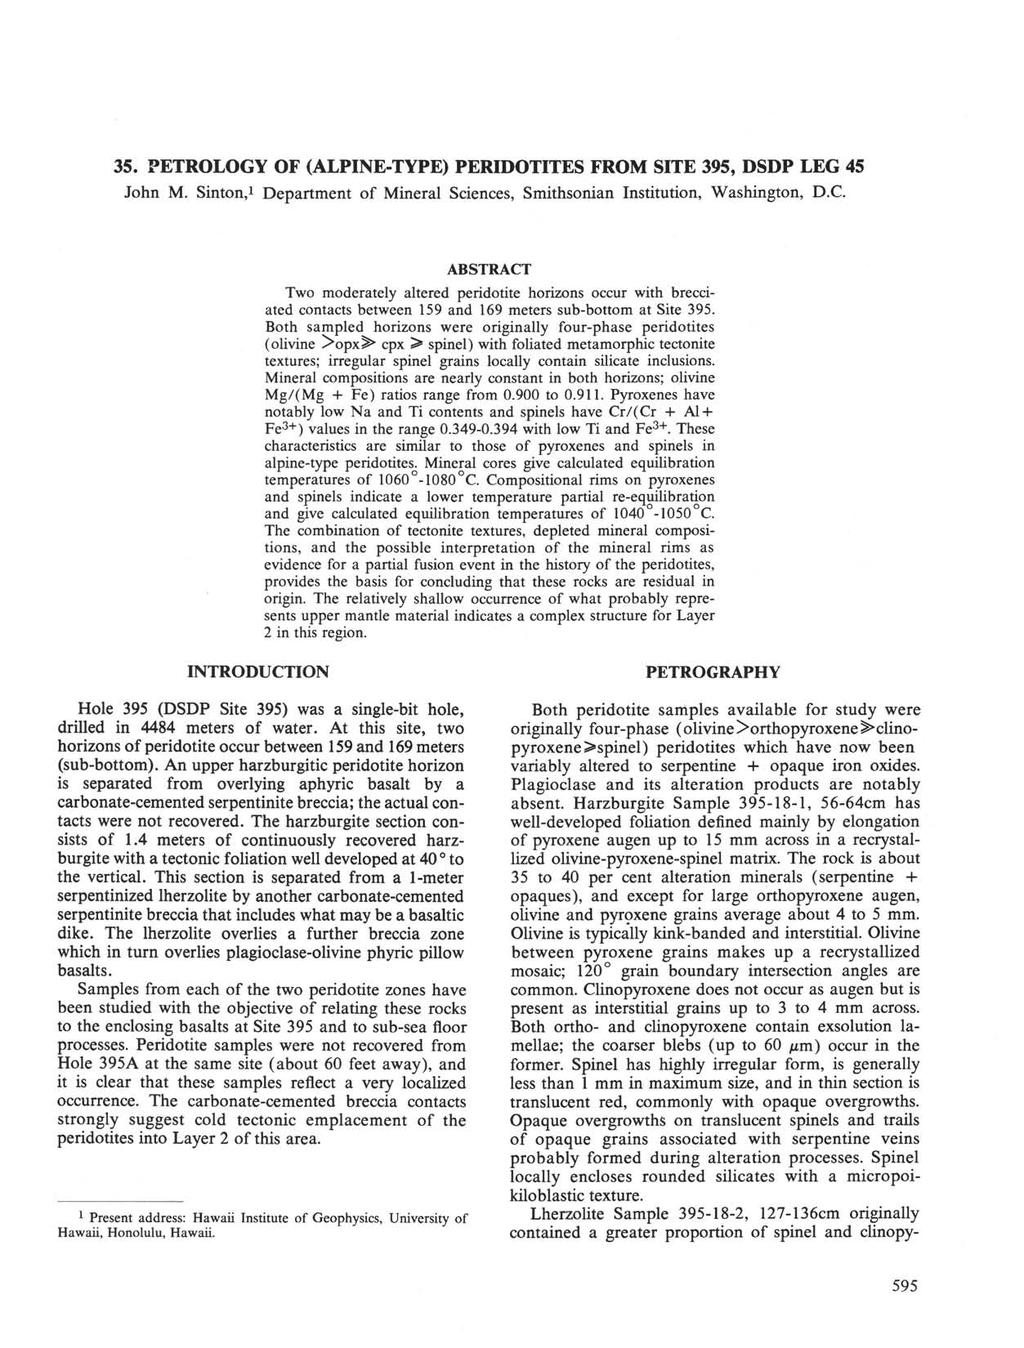 35. PETROLOGY OF (LPINE-TYPE) PERIDOTITES FROM SITE 395, DSDP LEG 45 John M. Sinton, 1 Department of Mineral Sciences, Smithsonian Institution, Washington, D.C.